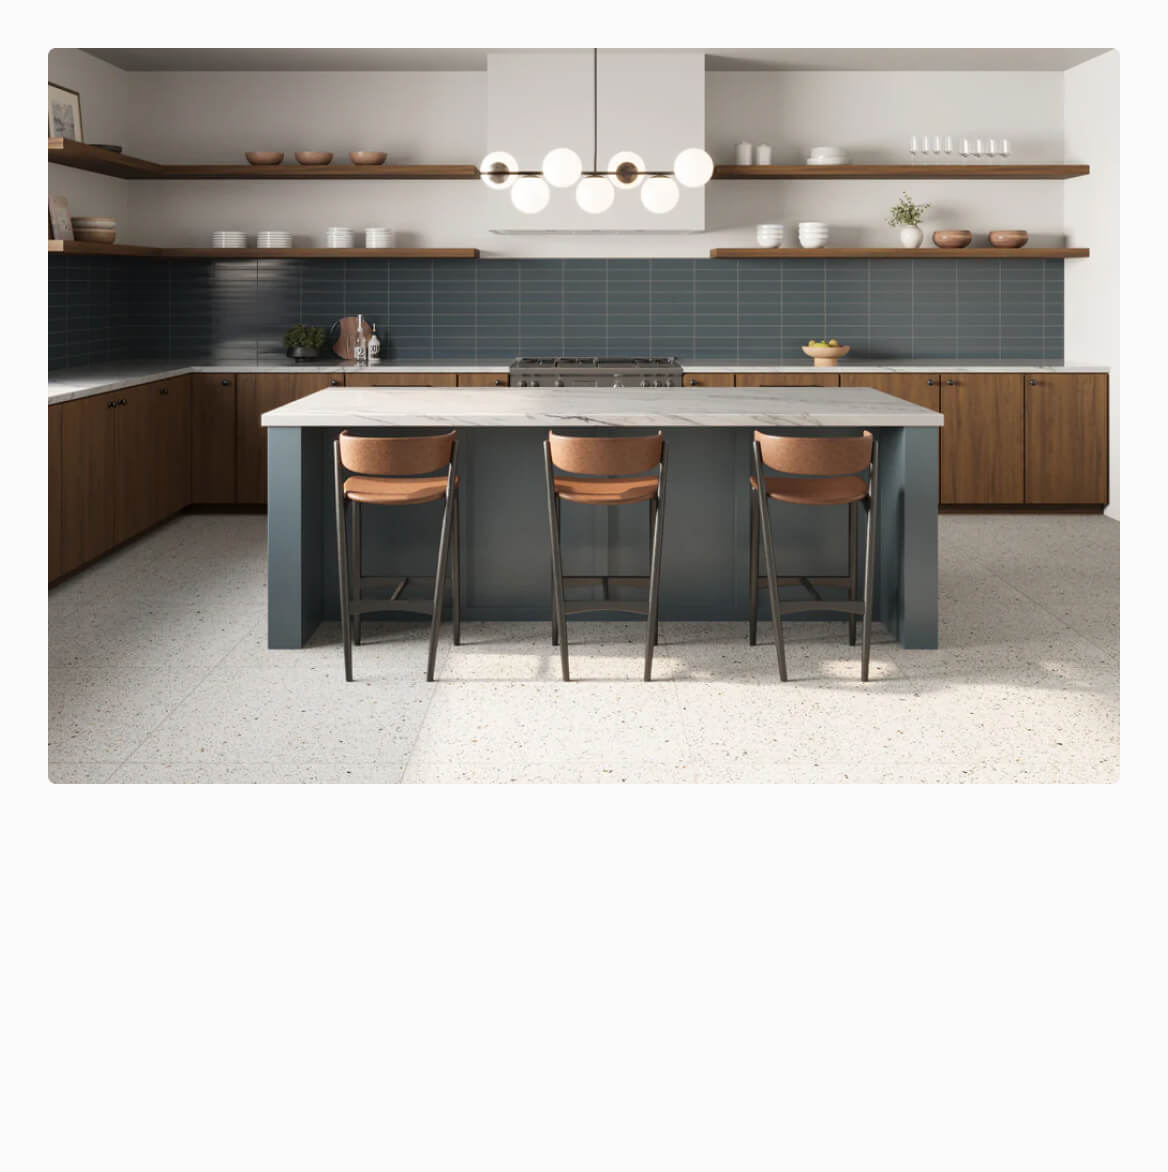 Sleek kitchen with deep blue subway tile backsplash and speckled terrazzo flooring